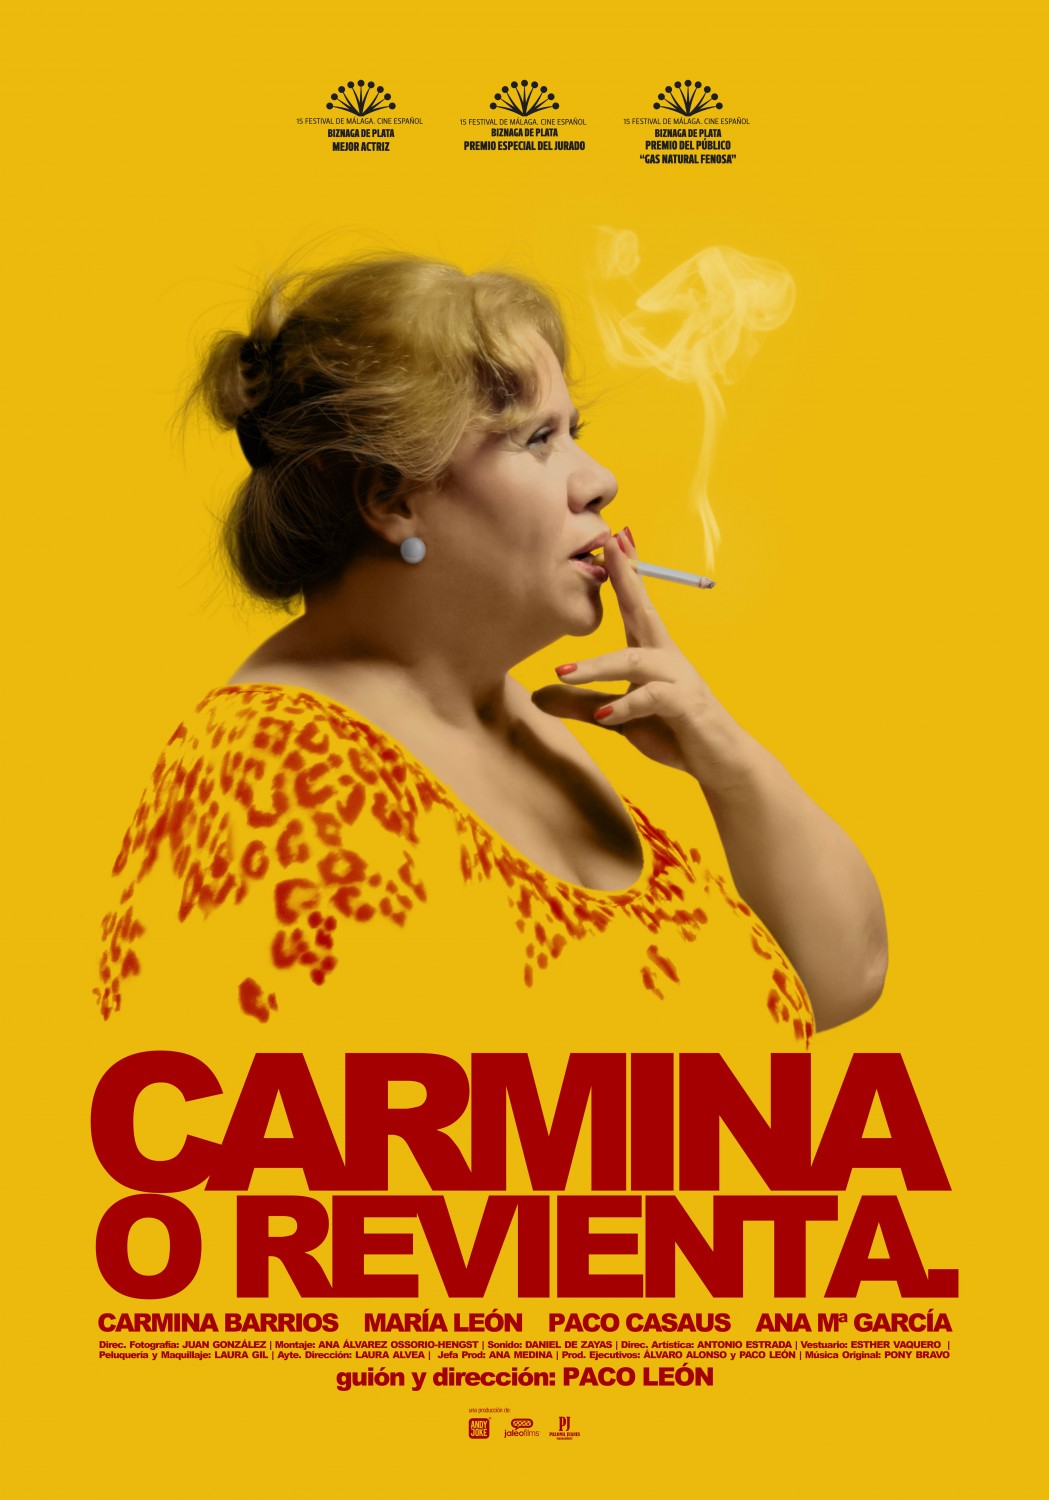 Extra Large Movie Poster Image for Carmina o revienta 